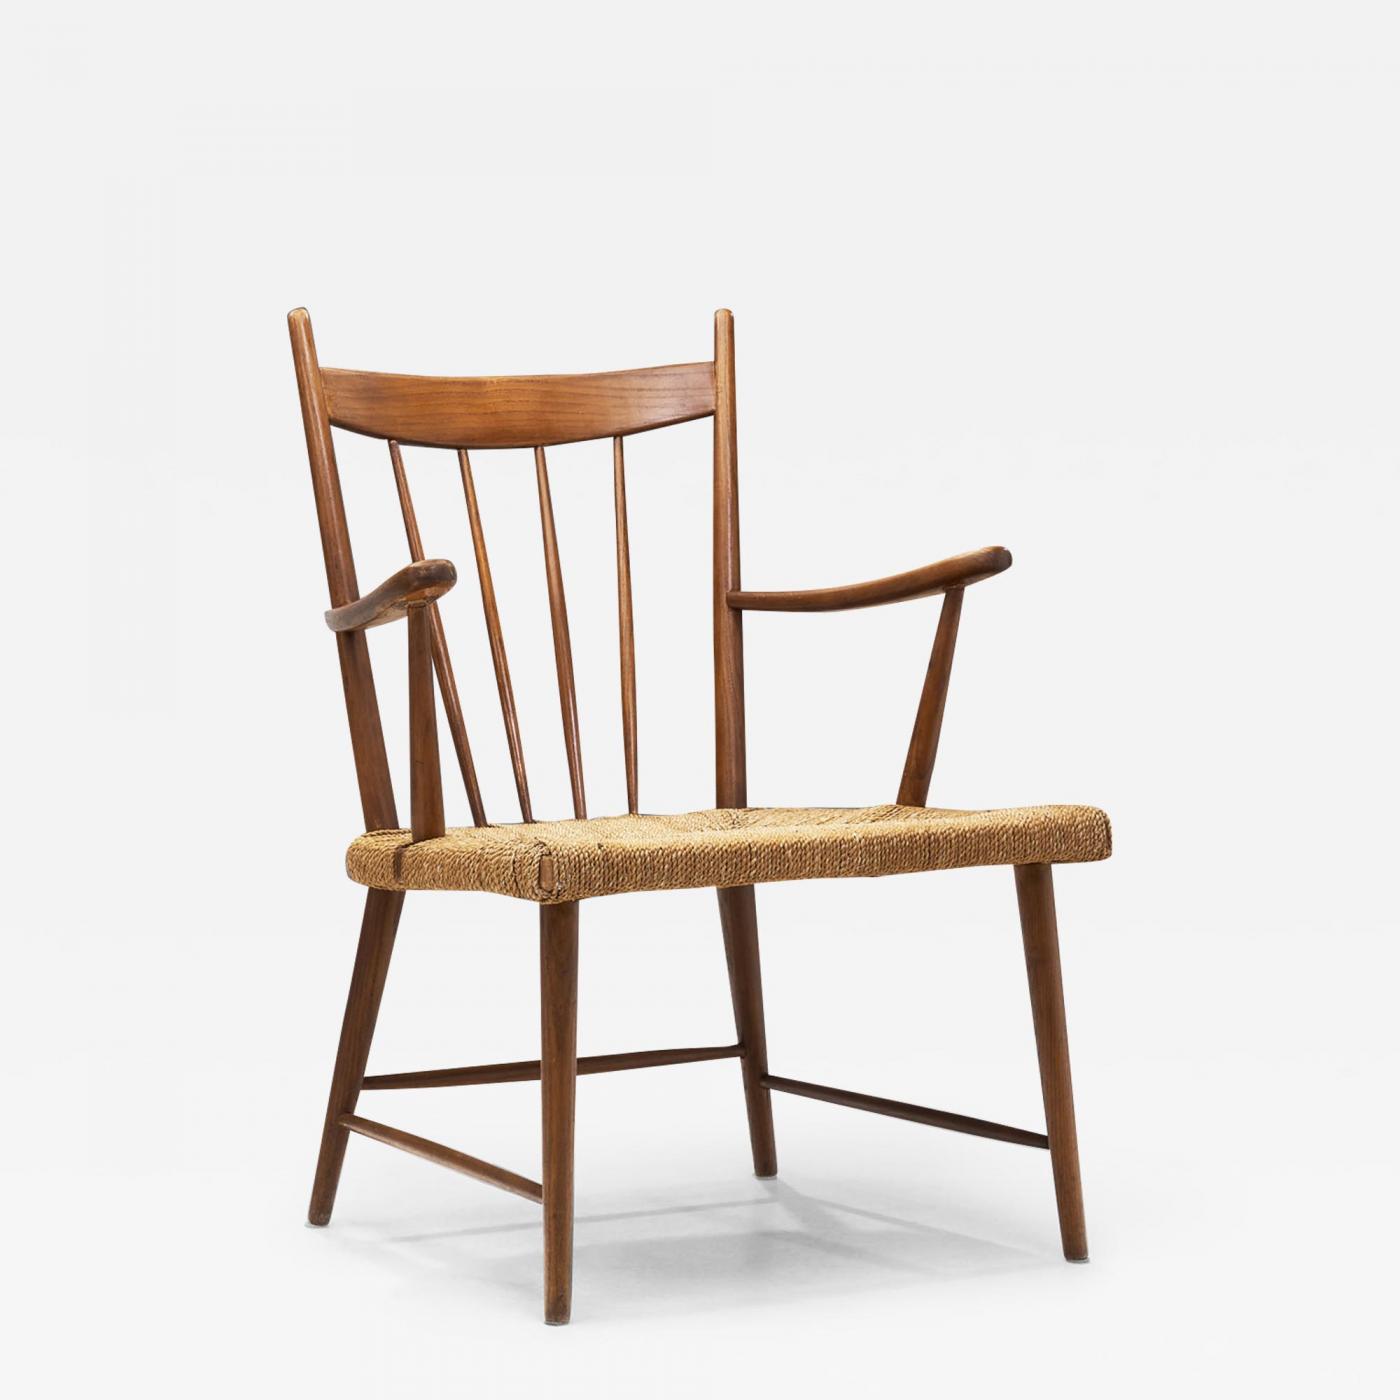 Teak Slatback Chair with Woven Danish Cord Seat, Denmark ca 1960s